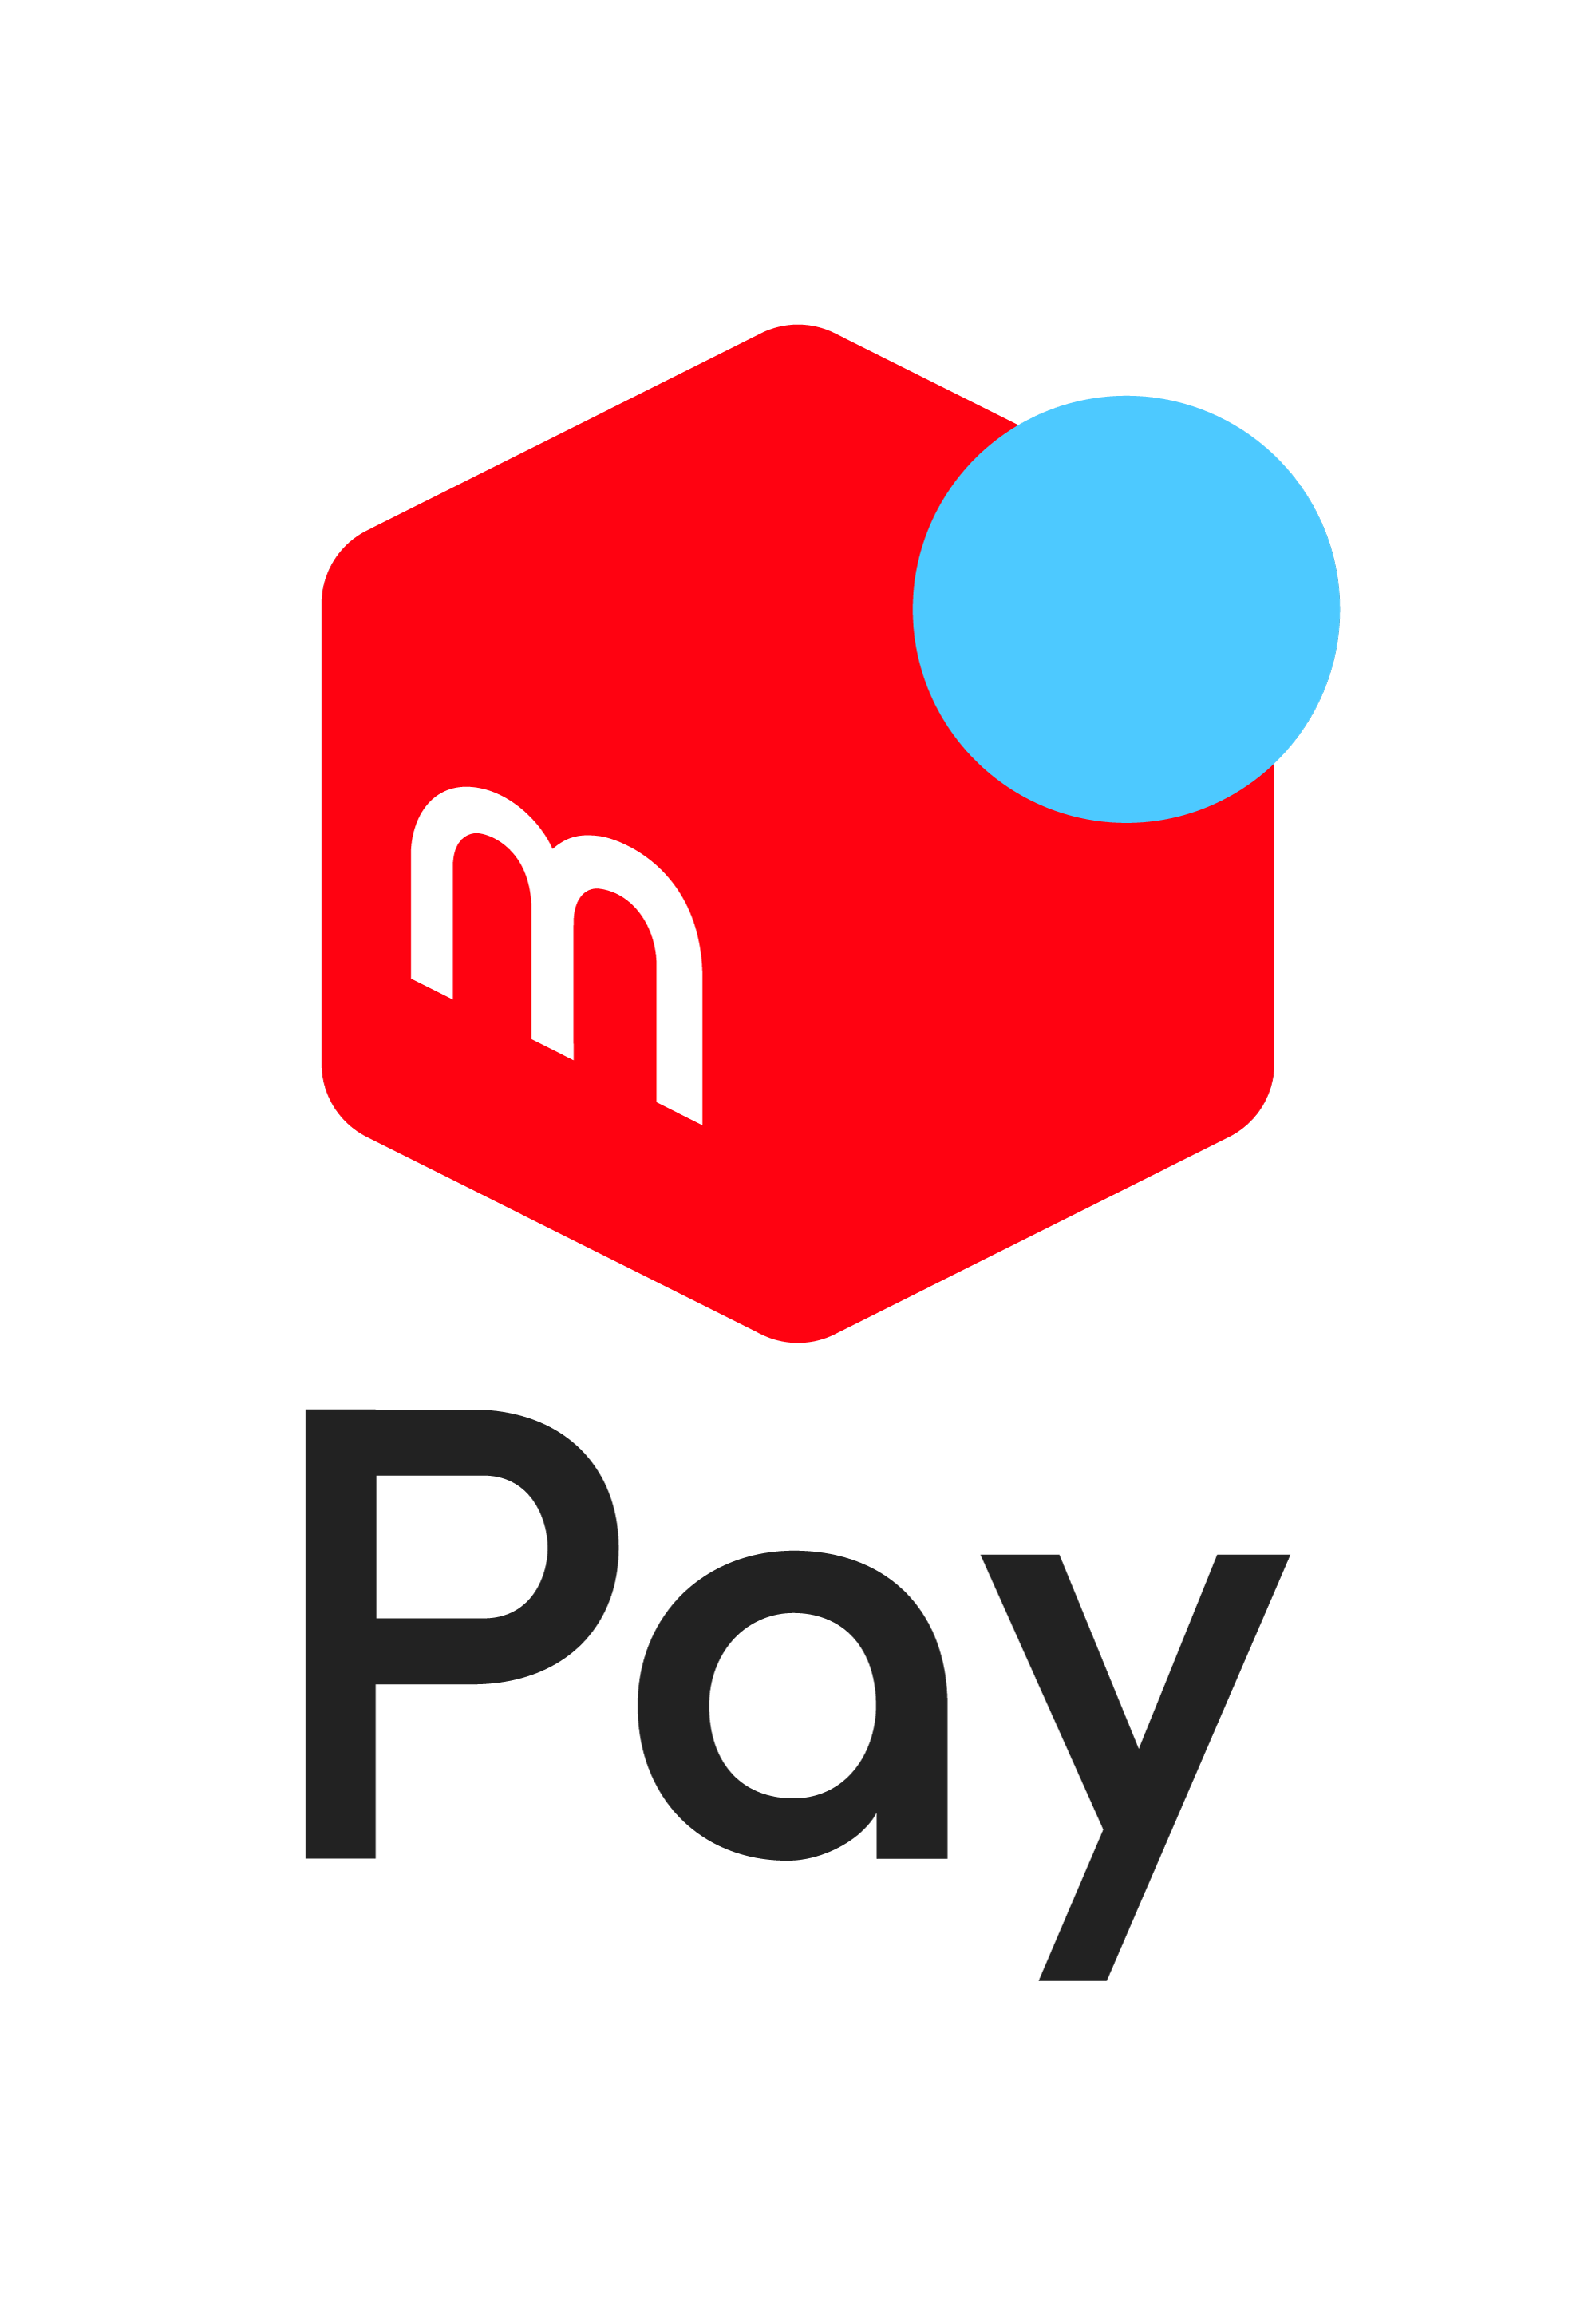 m Pay